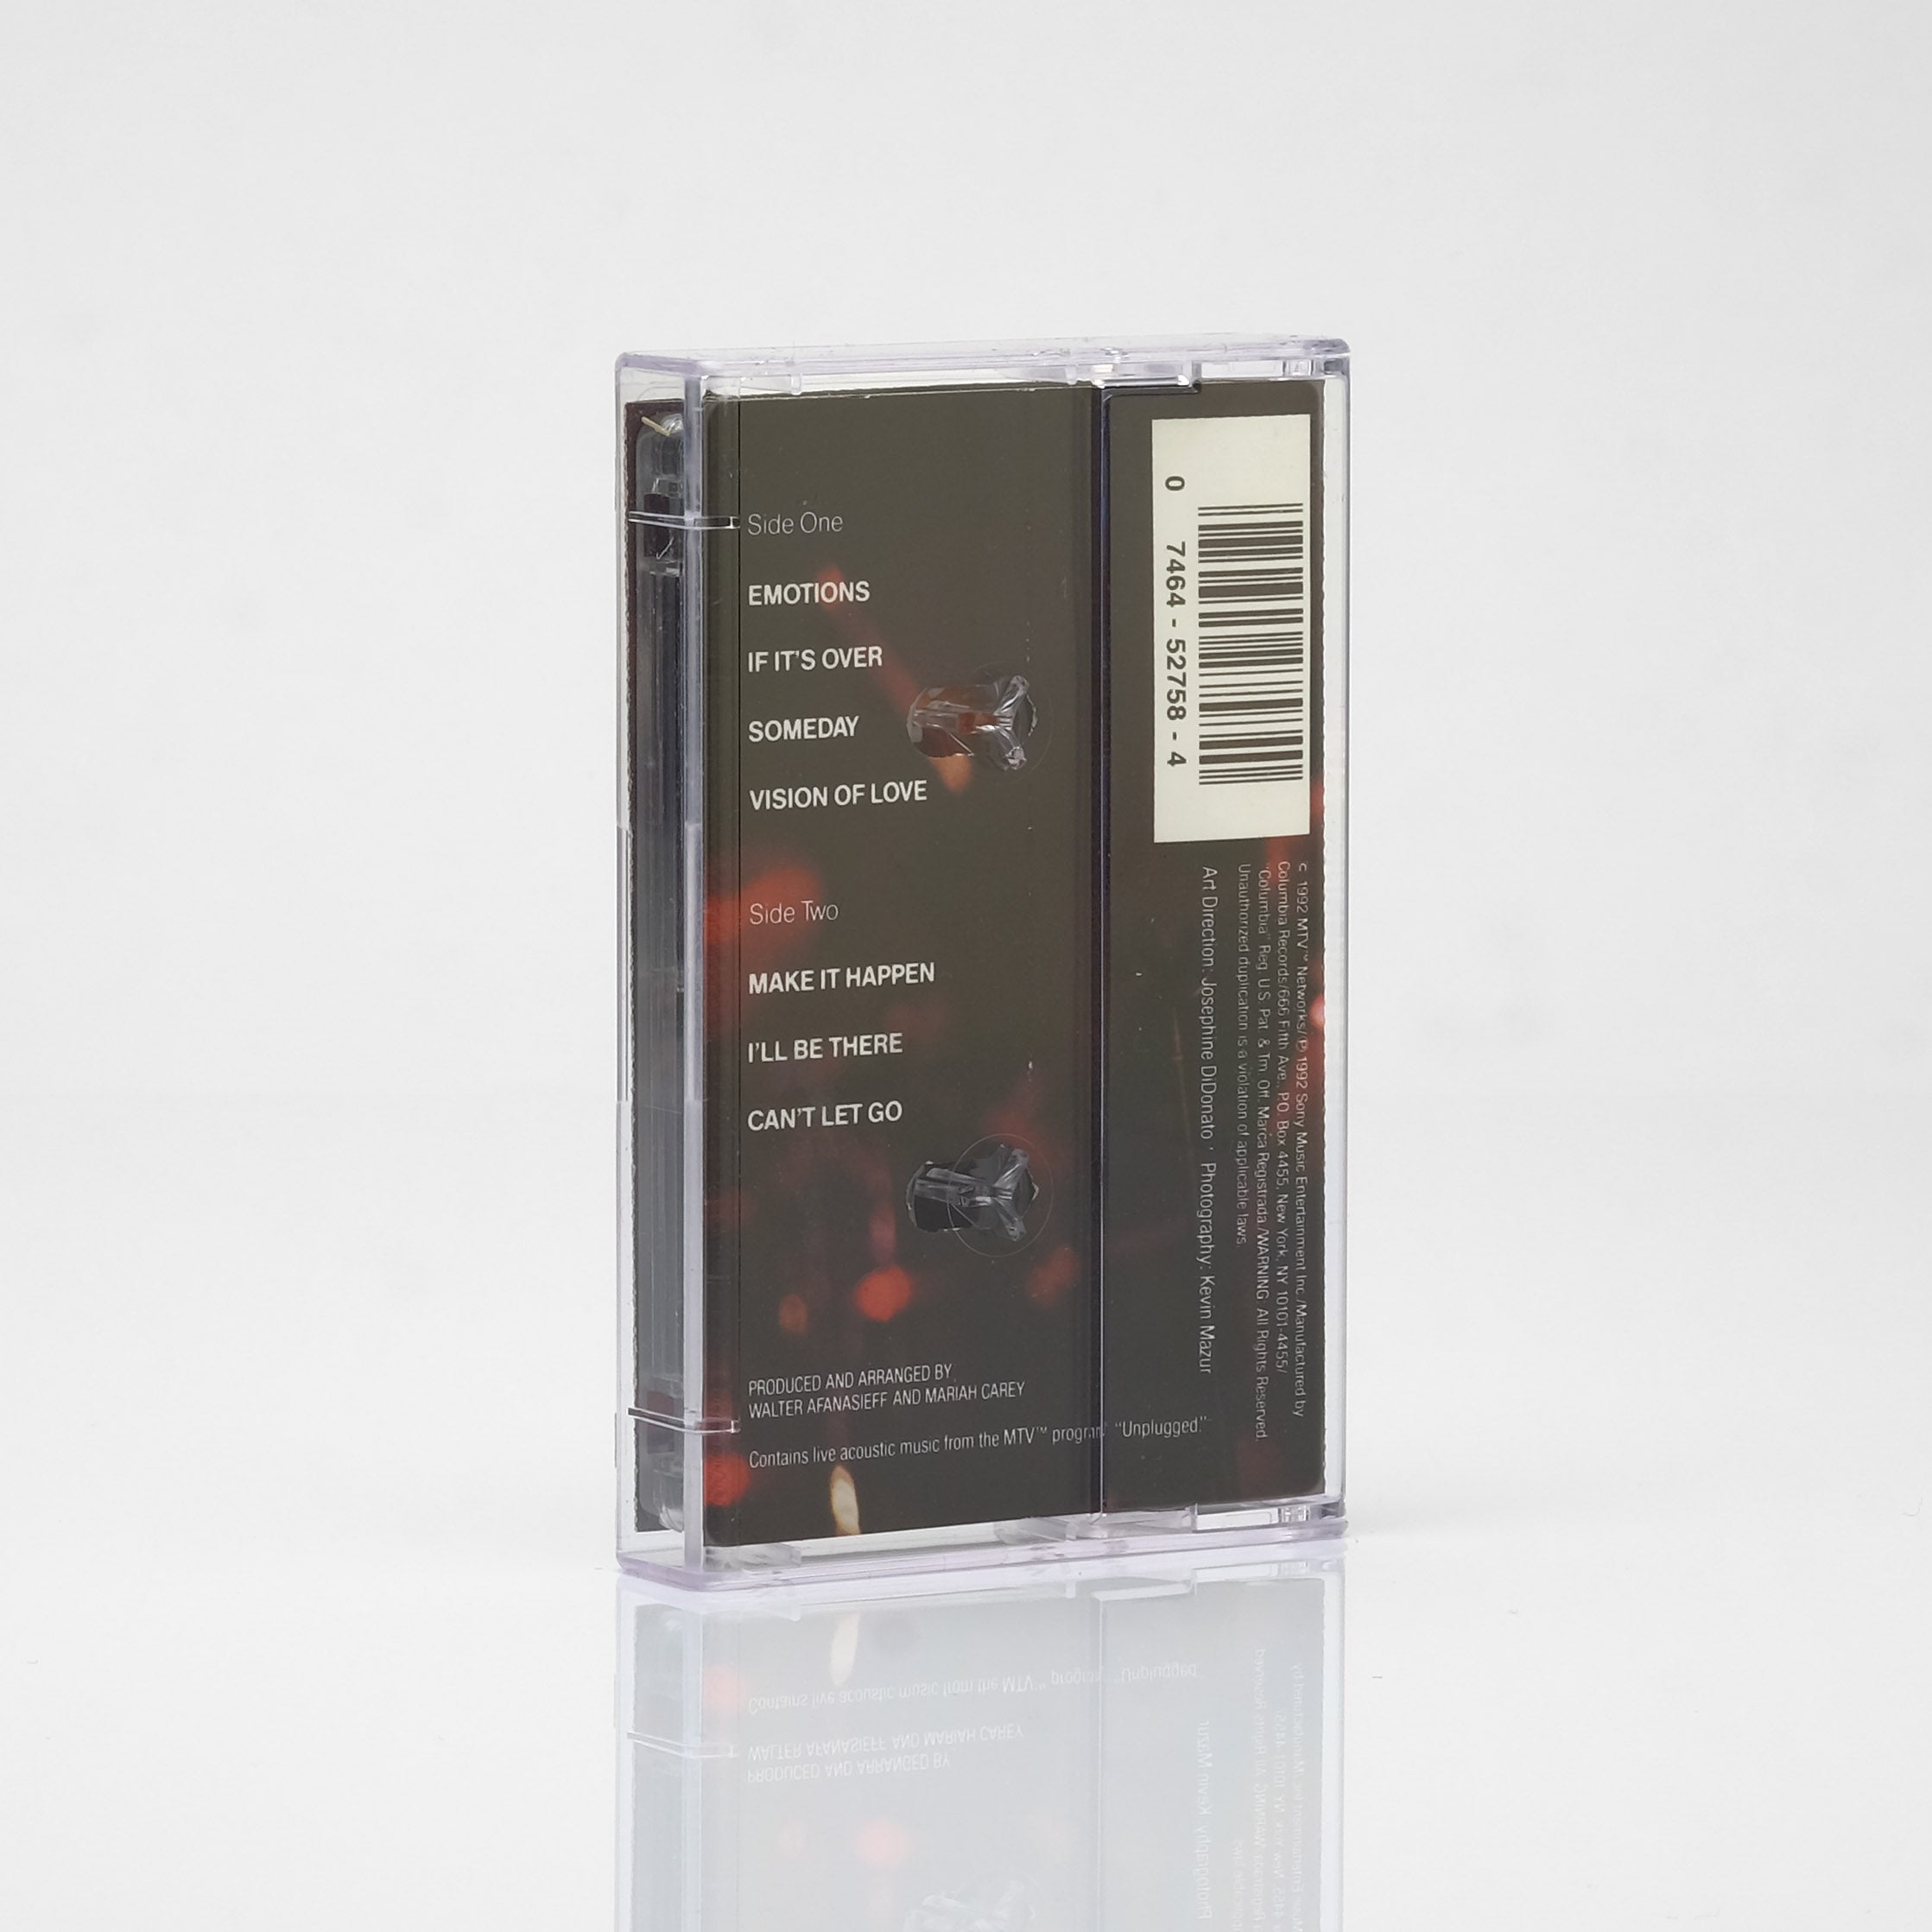 Mariah Carey -  MTV Unplugged EP Cassette Tape